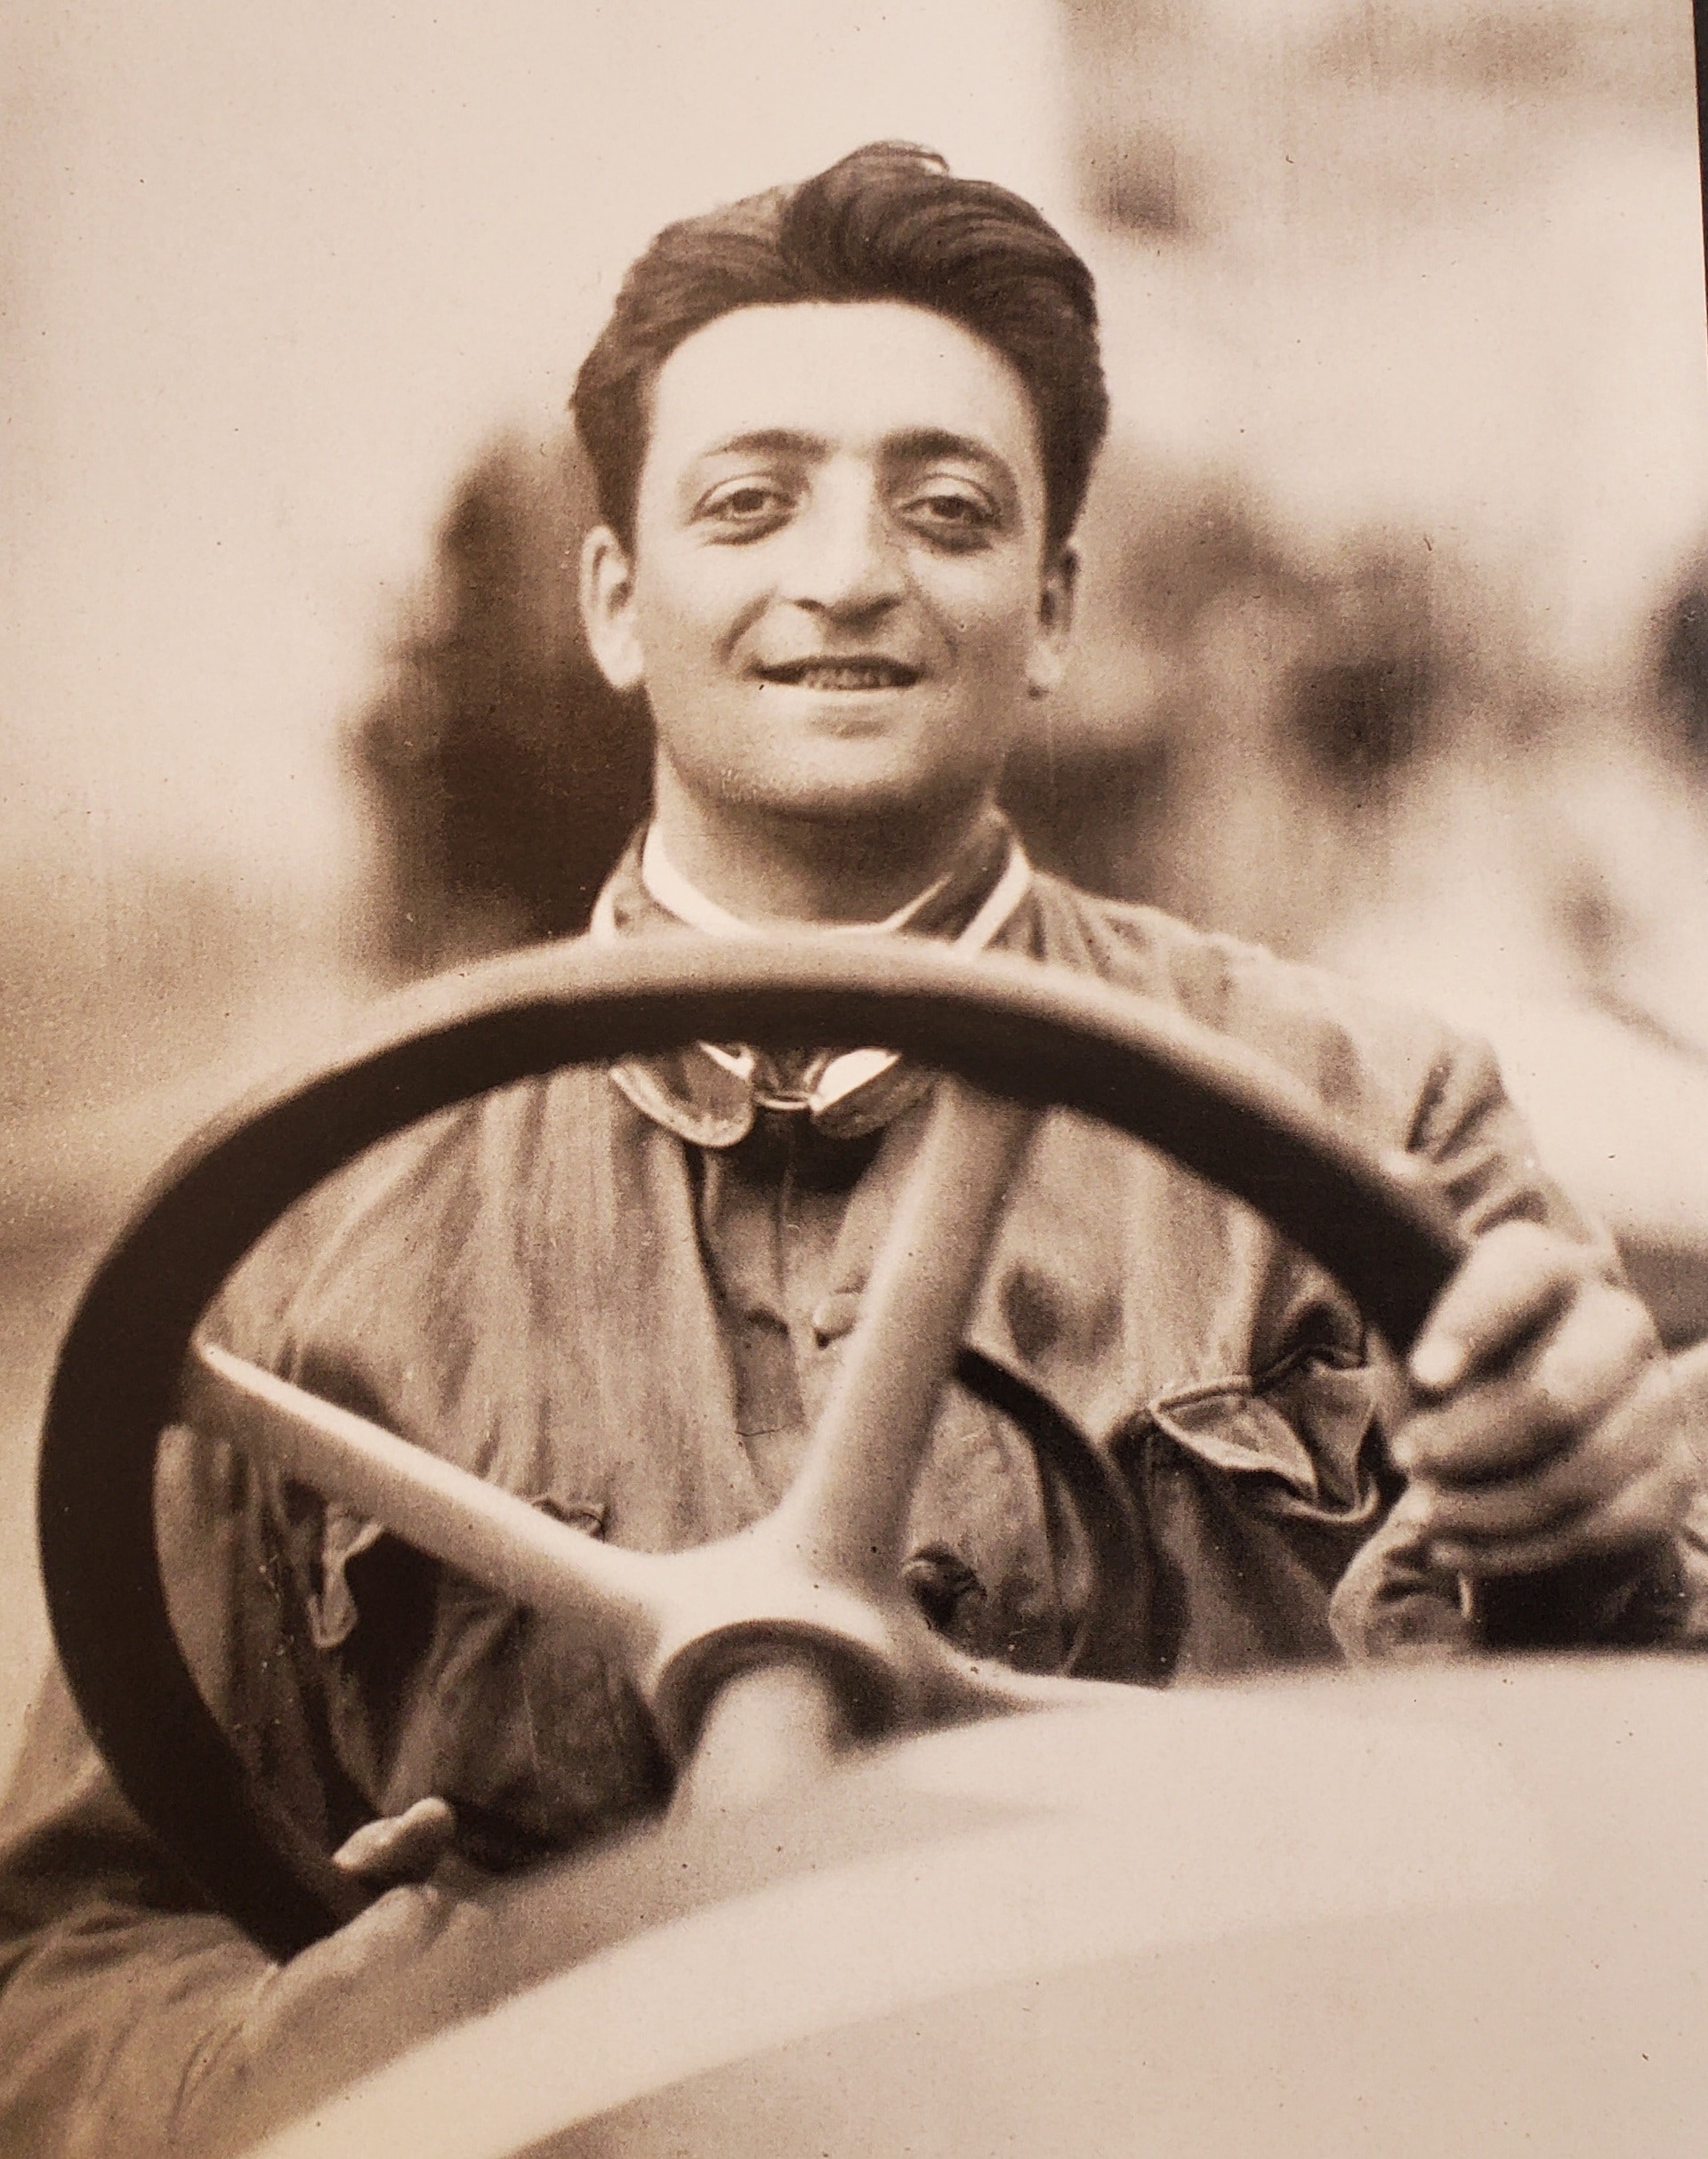 Black and white photo of Enzo Ferrari